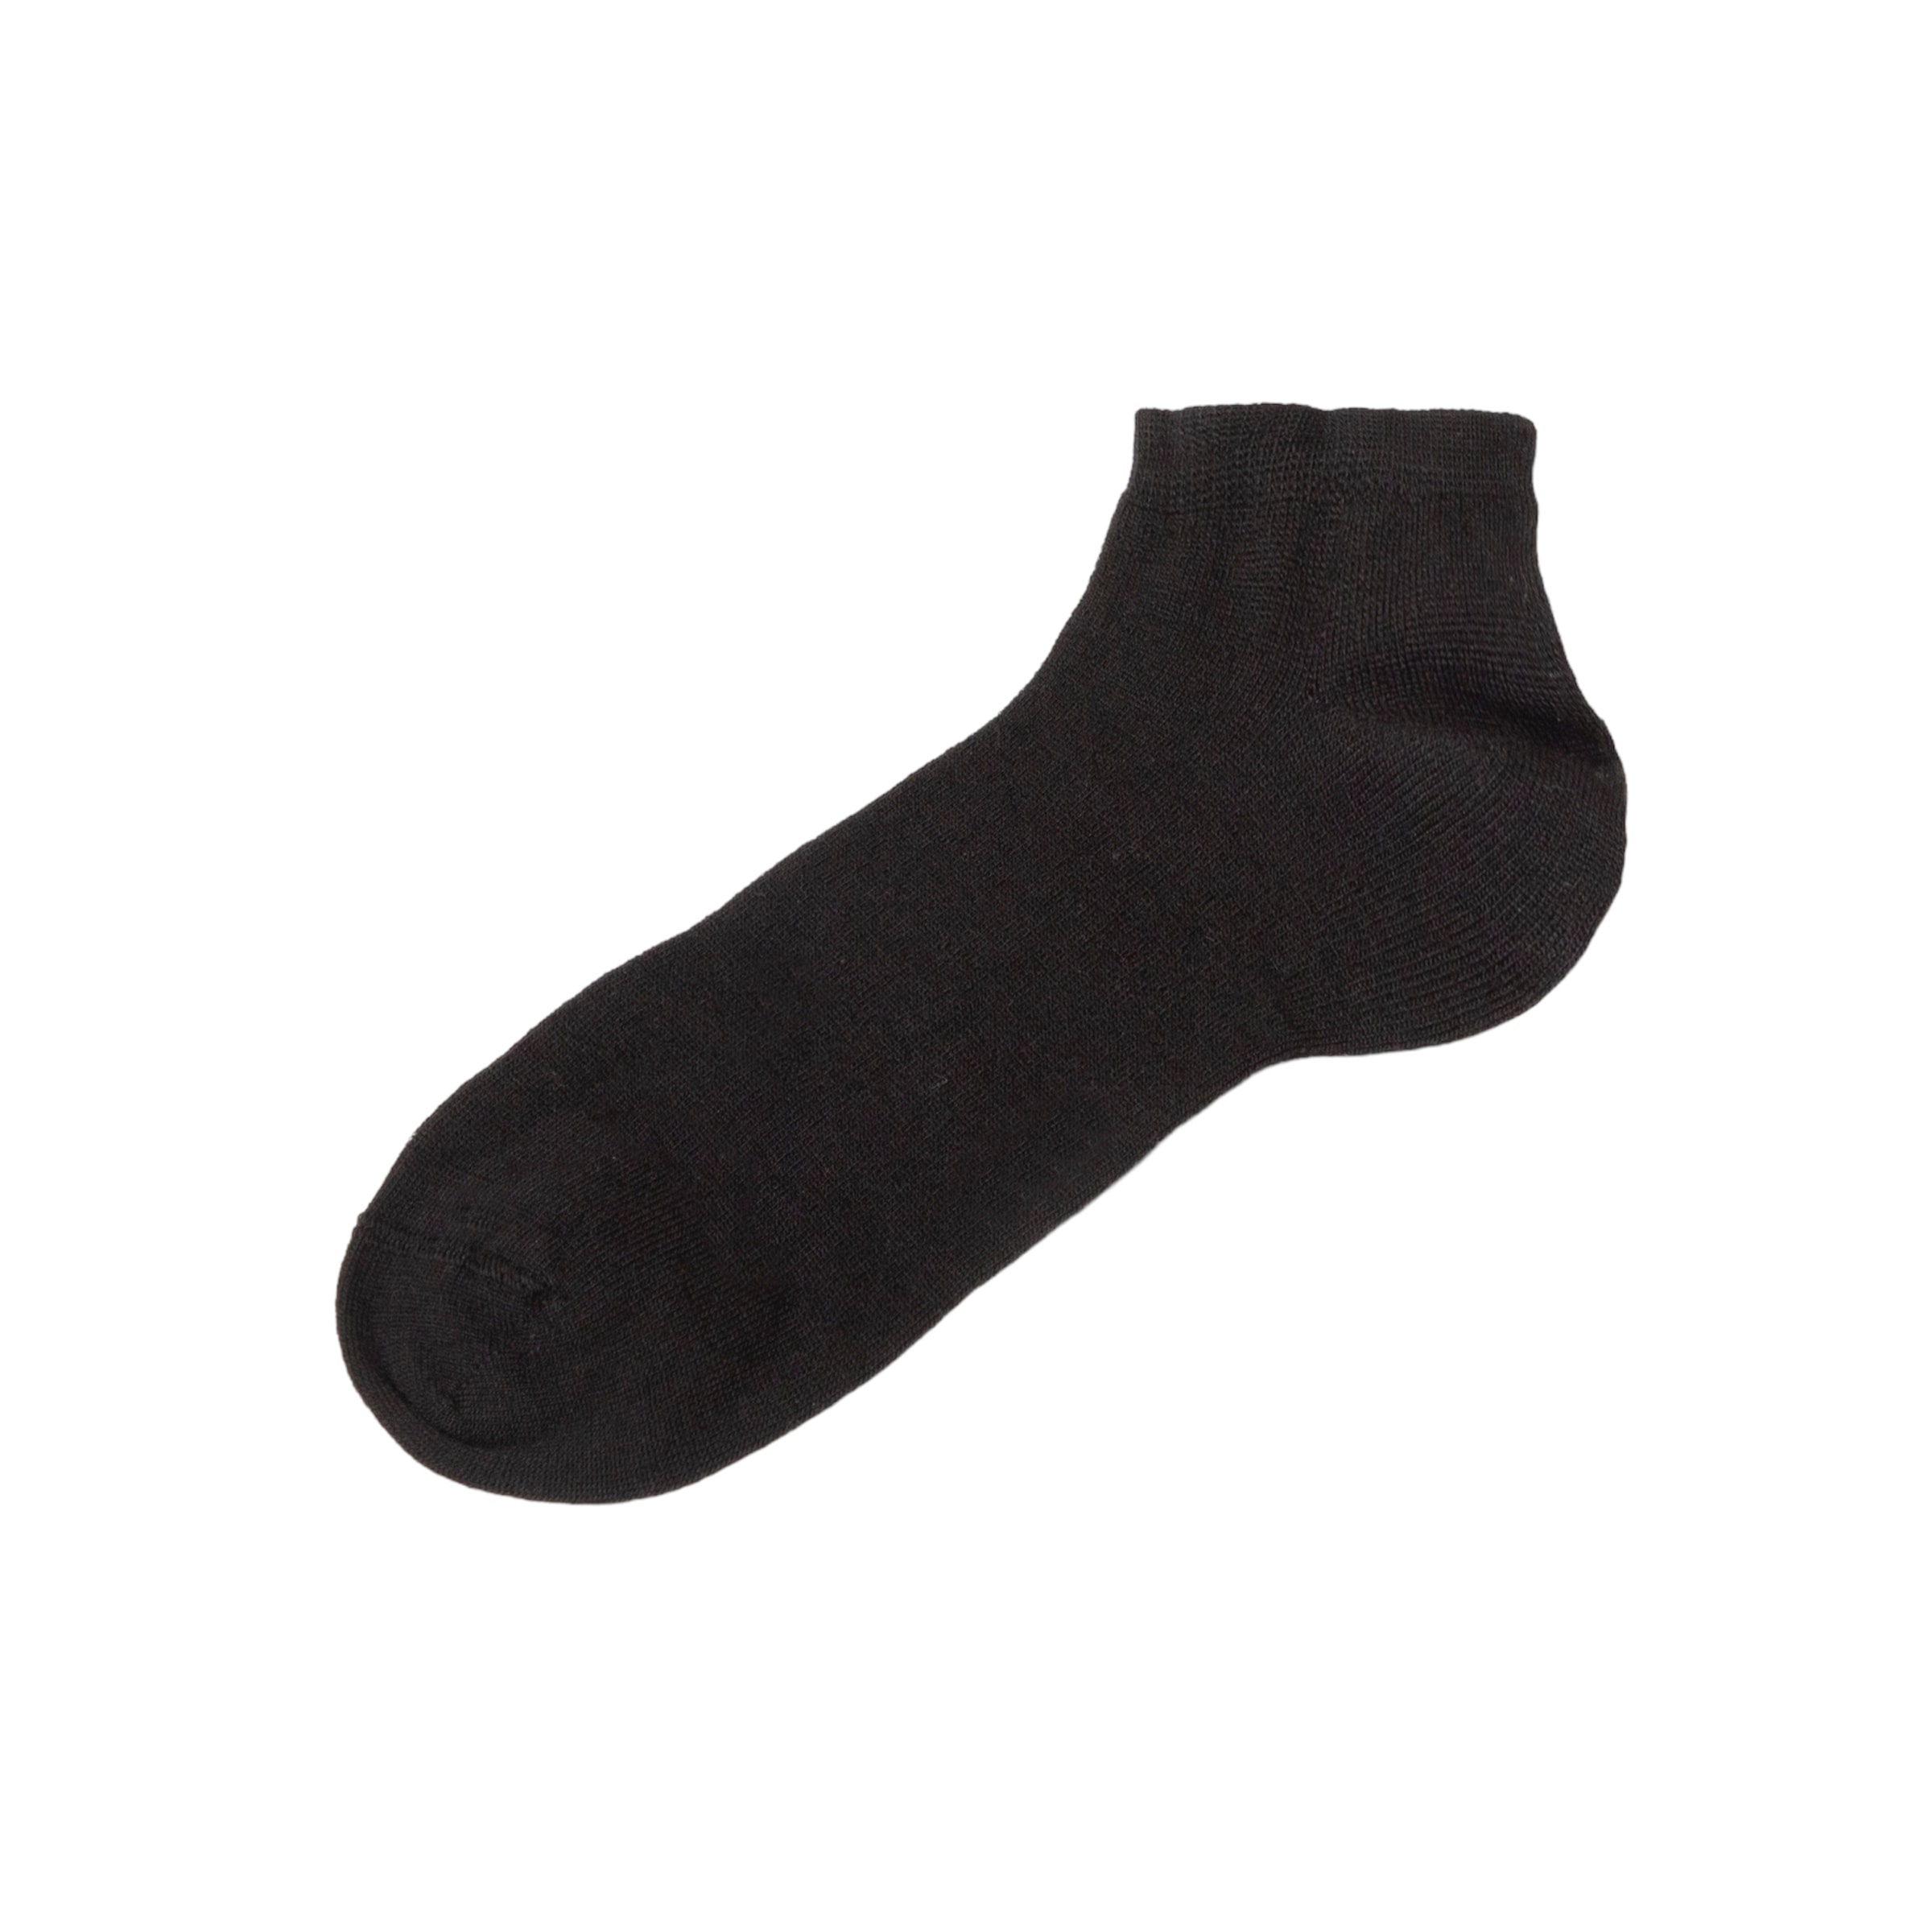 Wool short socks